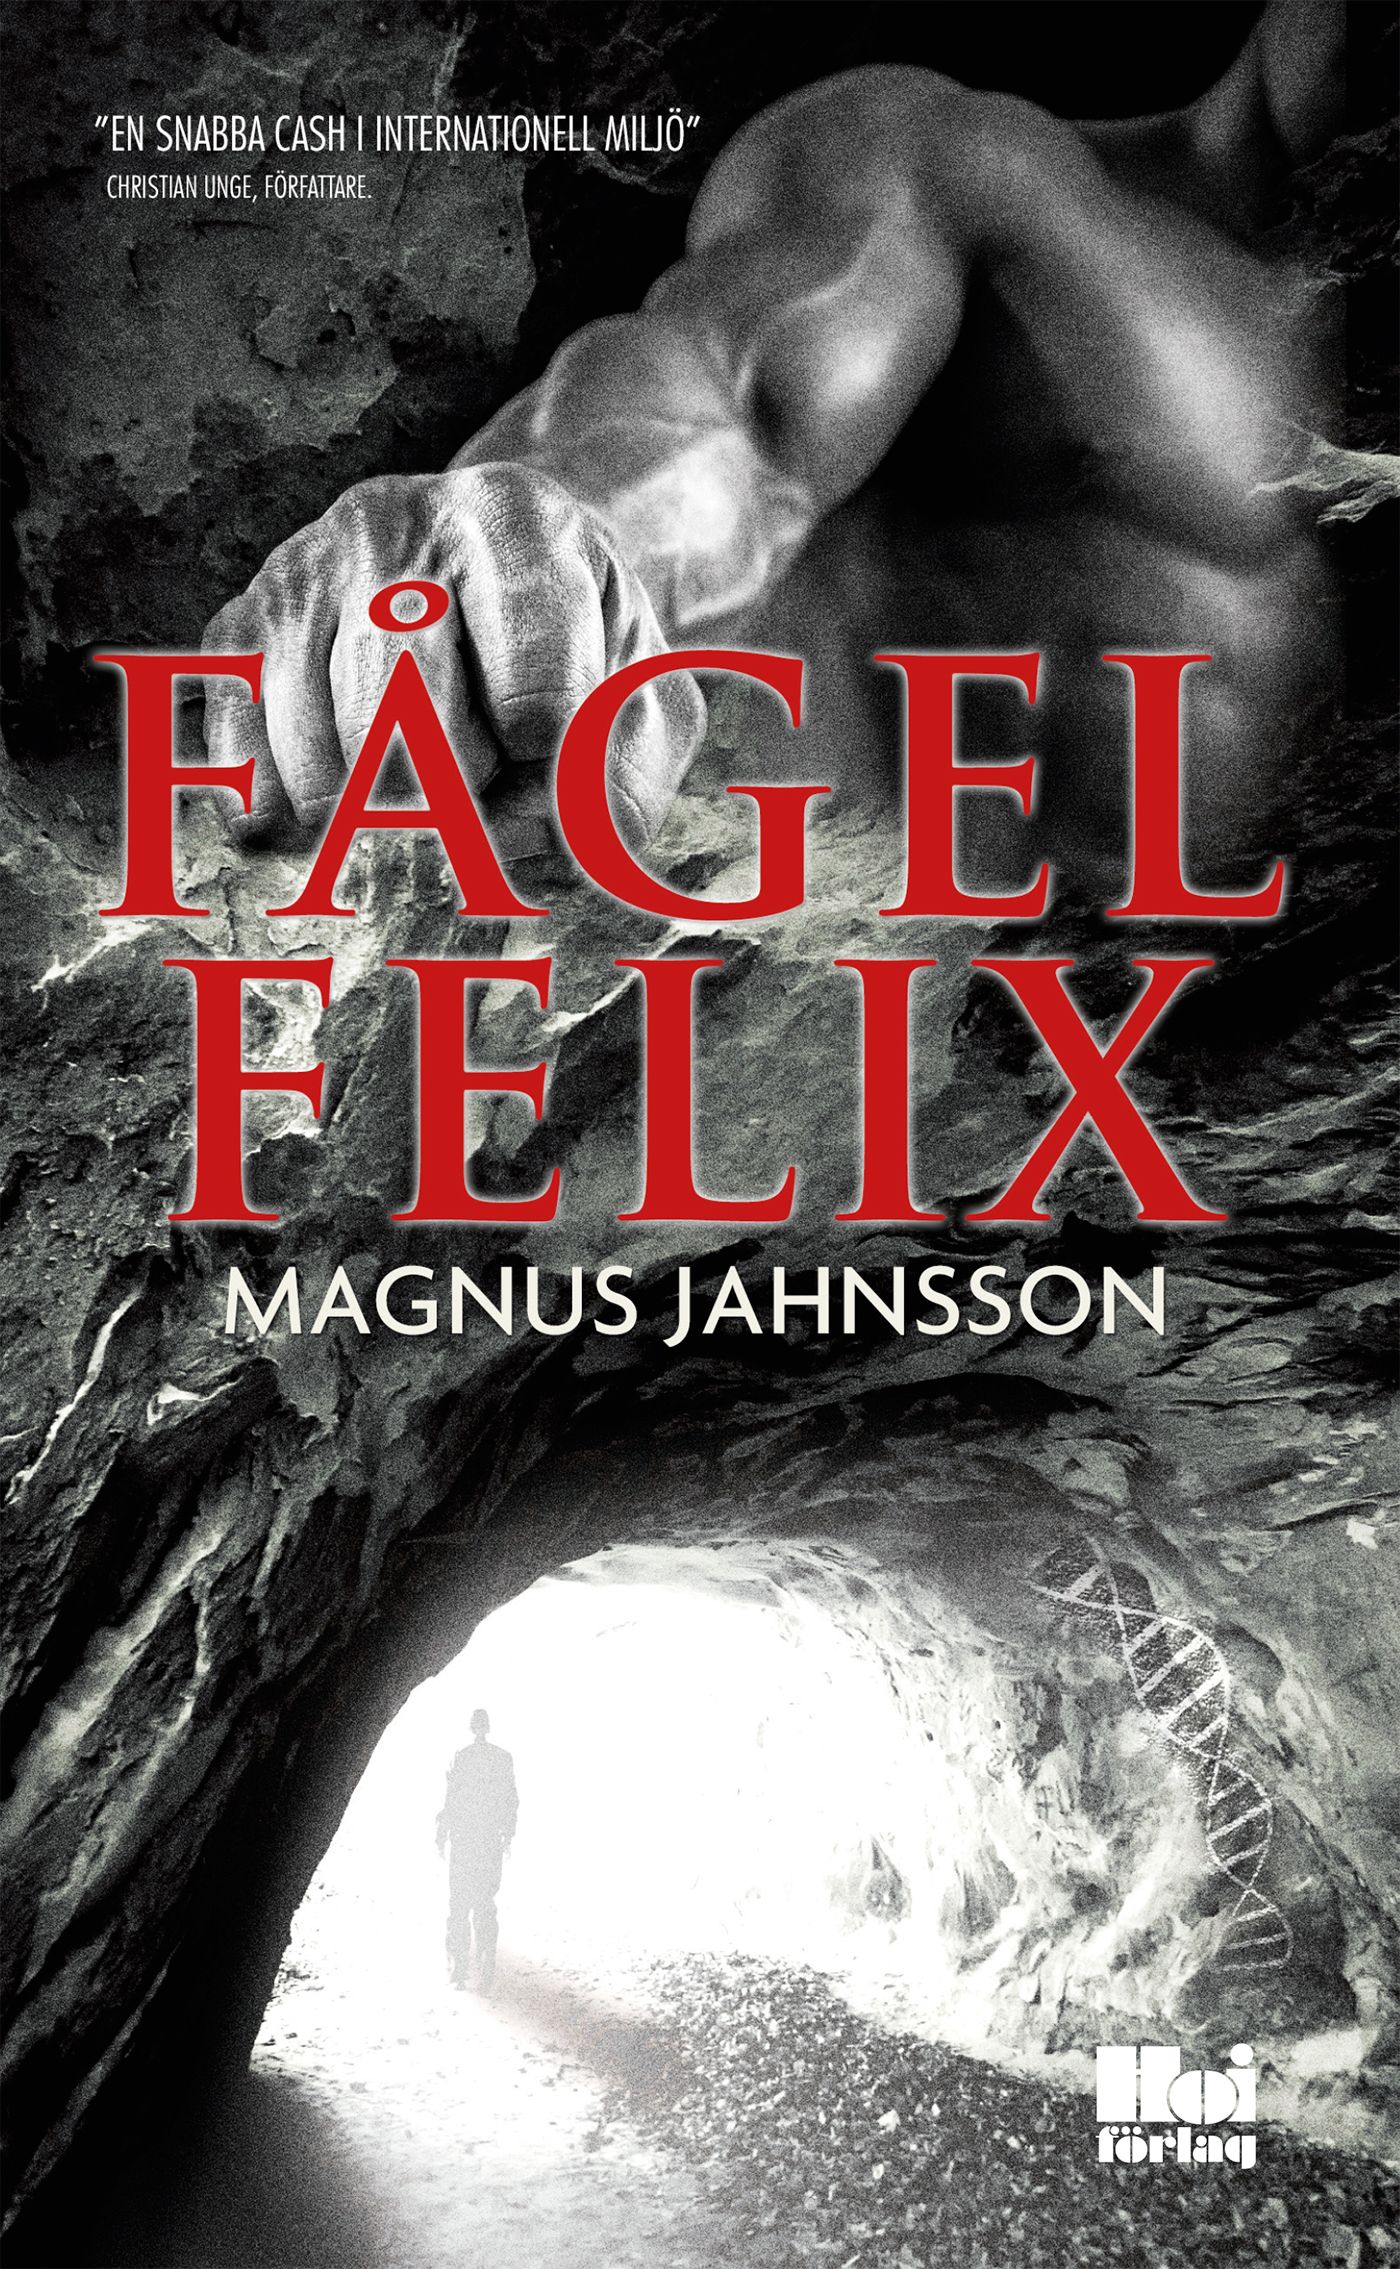 Fågel Felix, eBook by Magnus Jahnsson